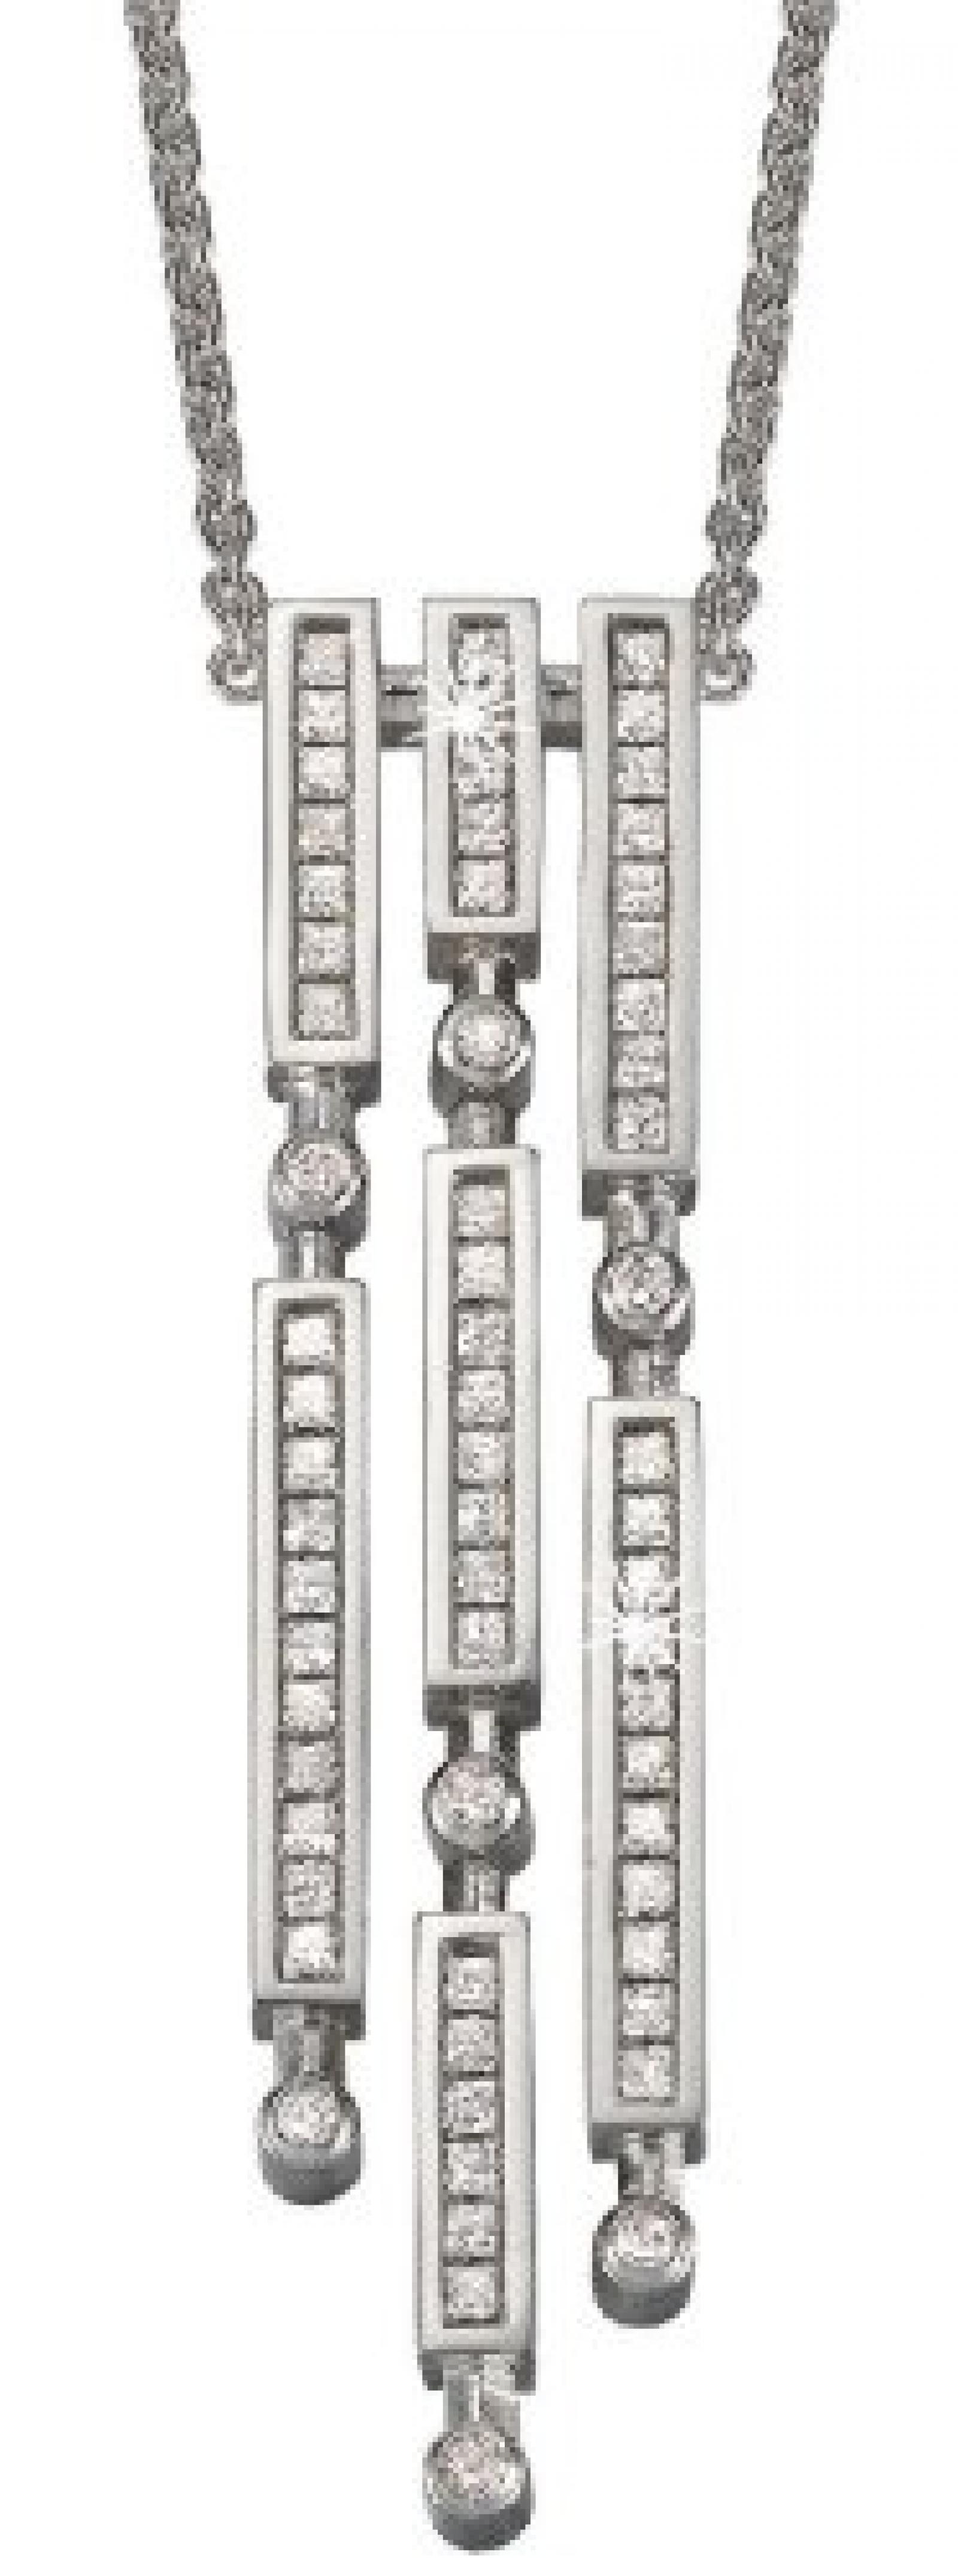 Pierre Cardin Damen Halskette 925 Sterling Silber rhodiniert Kristall Zirkonia Cascade 42 cm weiß PCNL90385A420 